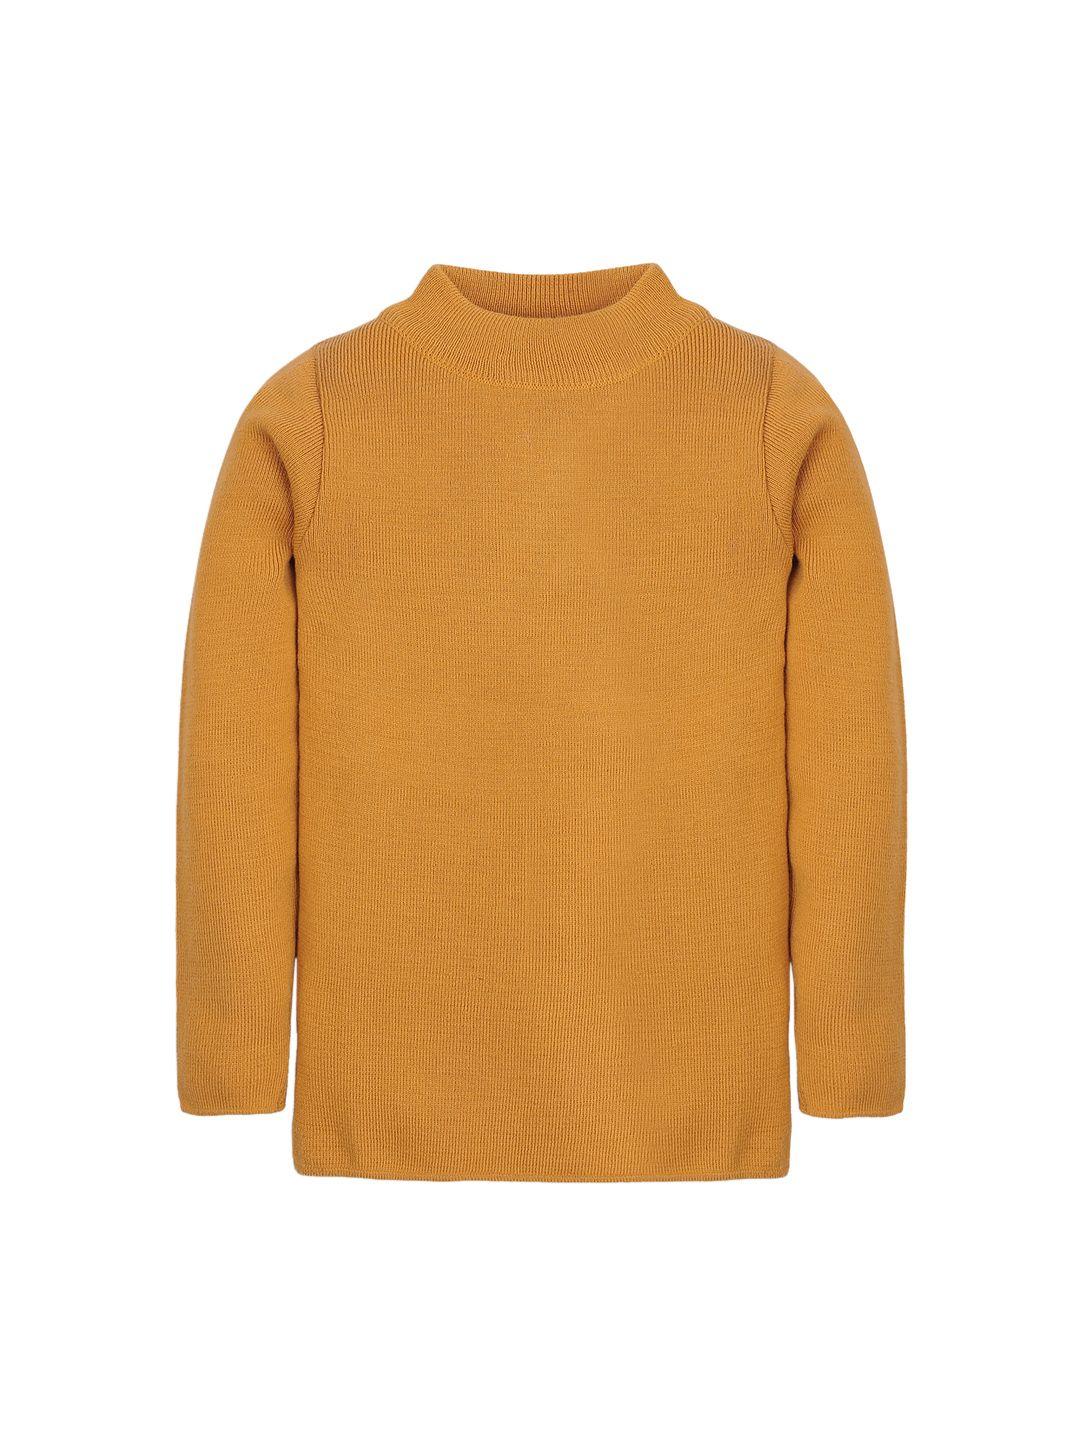 rvk unisex mustard yellow solid sweater